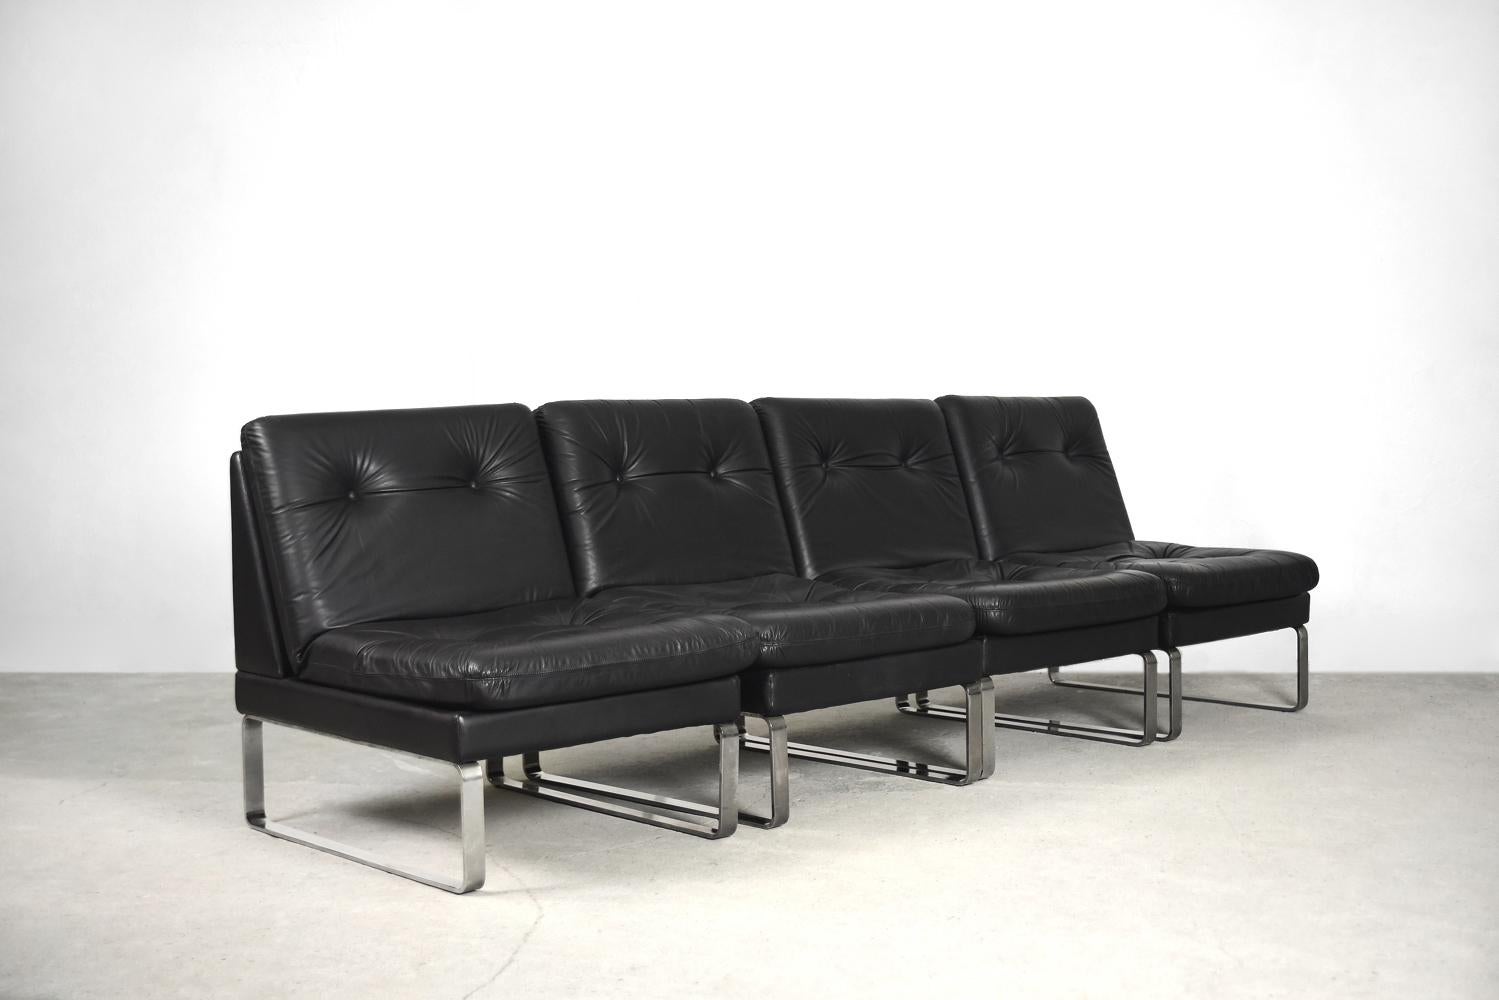 Late 20th Century Vintage Minimalist German Black Leather & Chrome Modular Sofa from Klöber For Sale